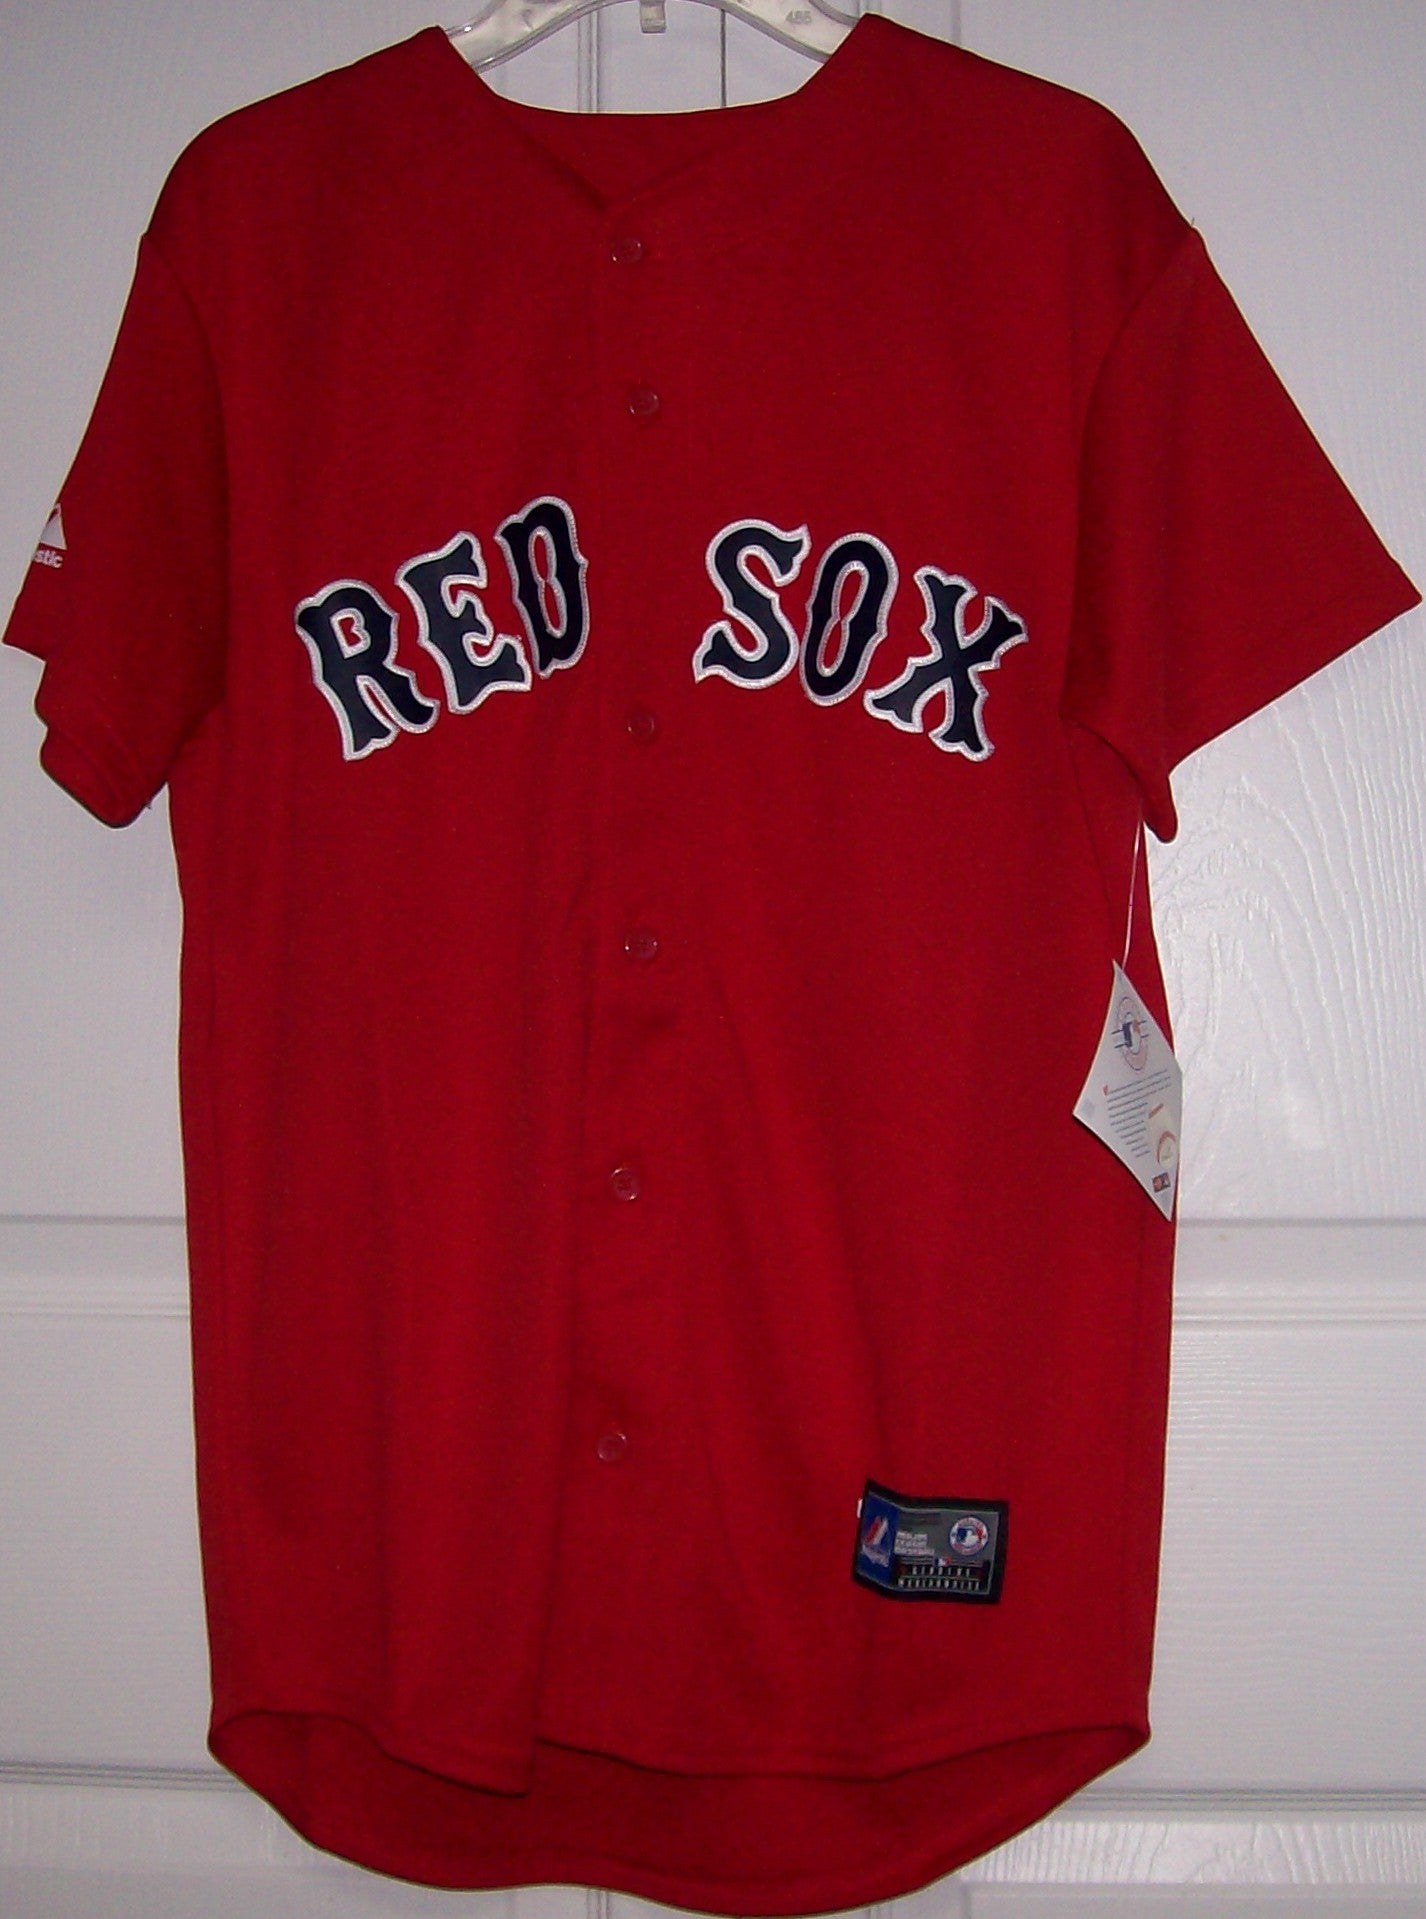 Boston Red Sox - Page 5 of 6 - Cheap MLB Baseball Jerseys